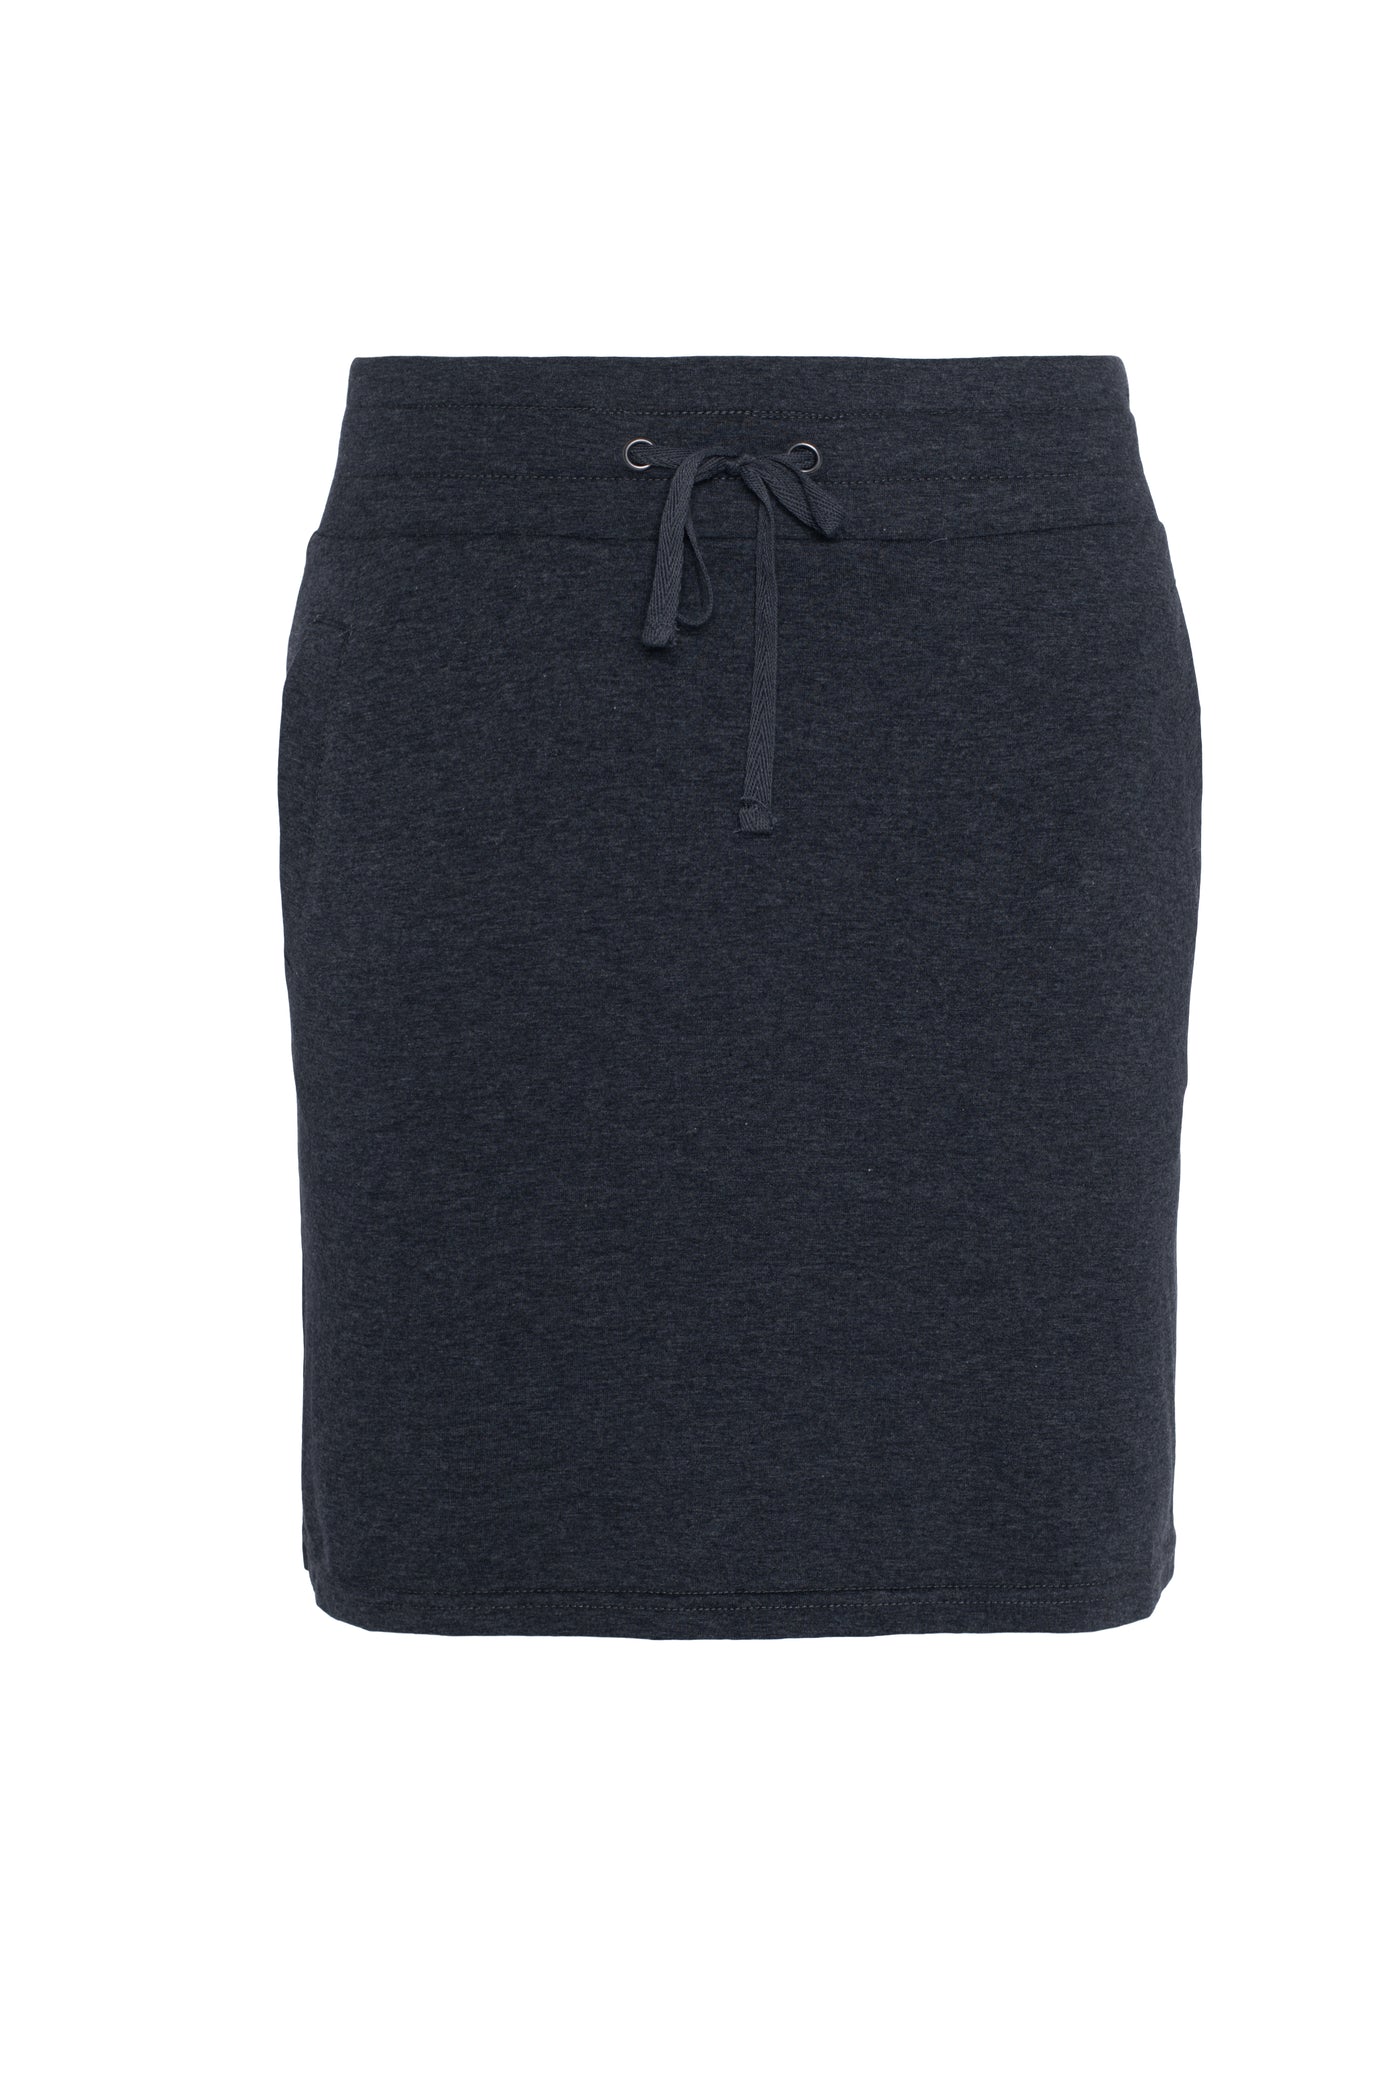 Skirt Simple II - Women's